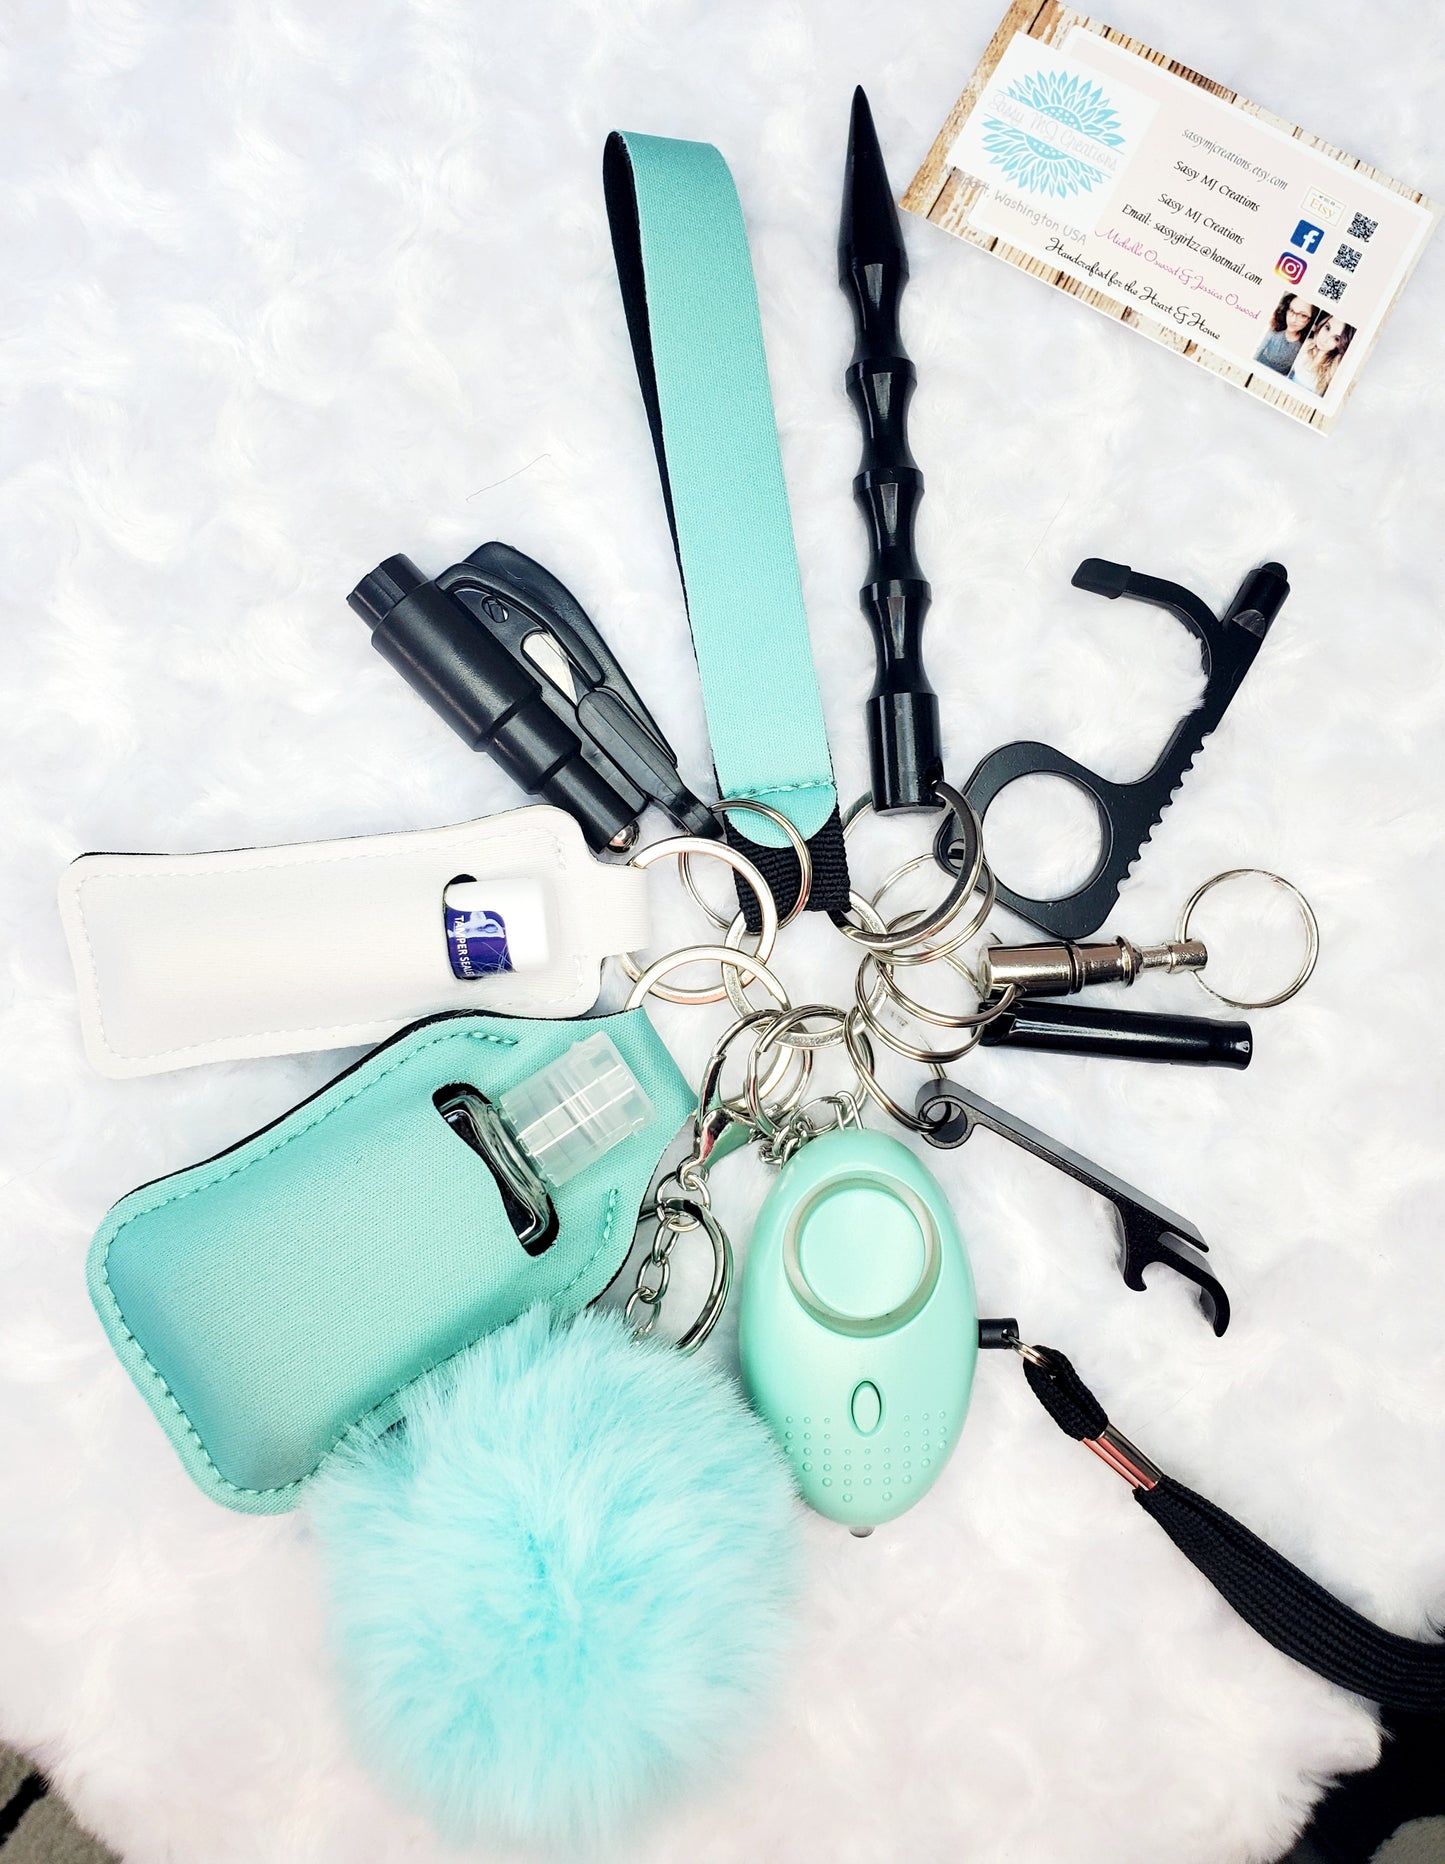 Neoprene Mint Green & White Safety Keychain Set-Personal Safety Kit 13 pc.